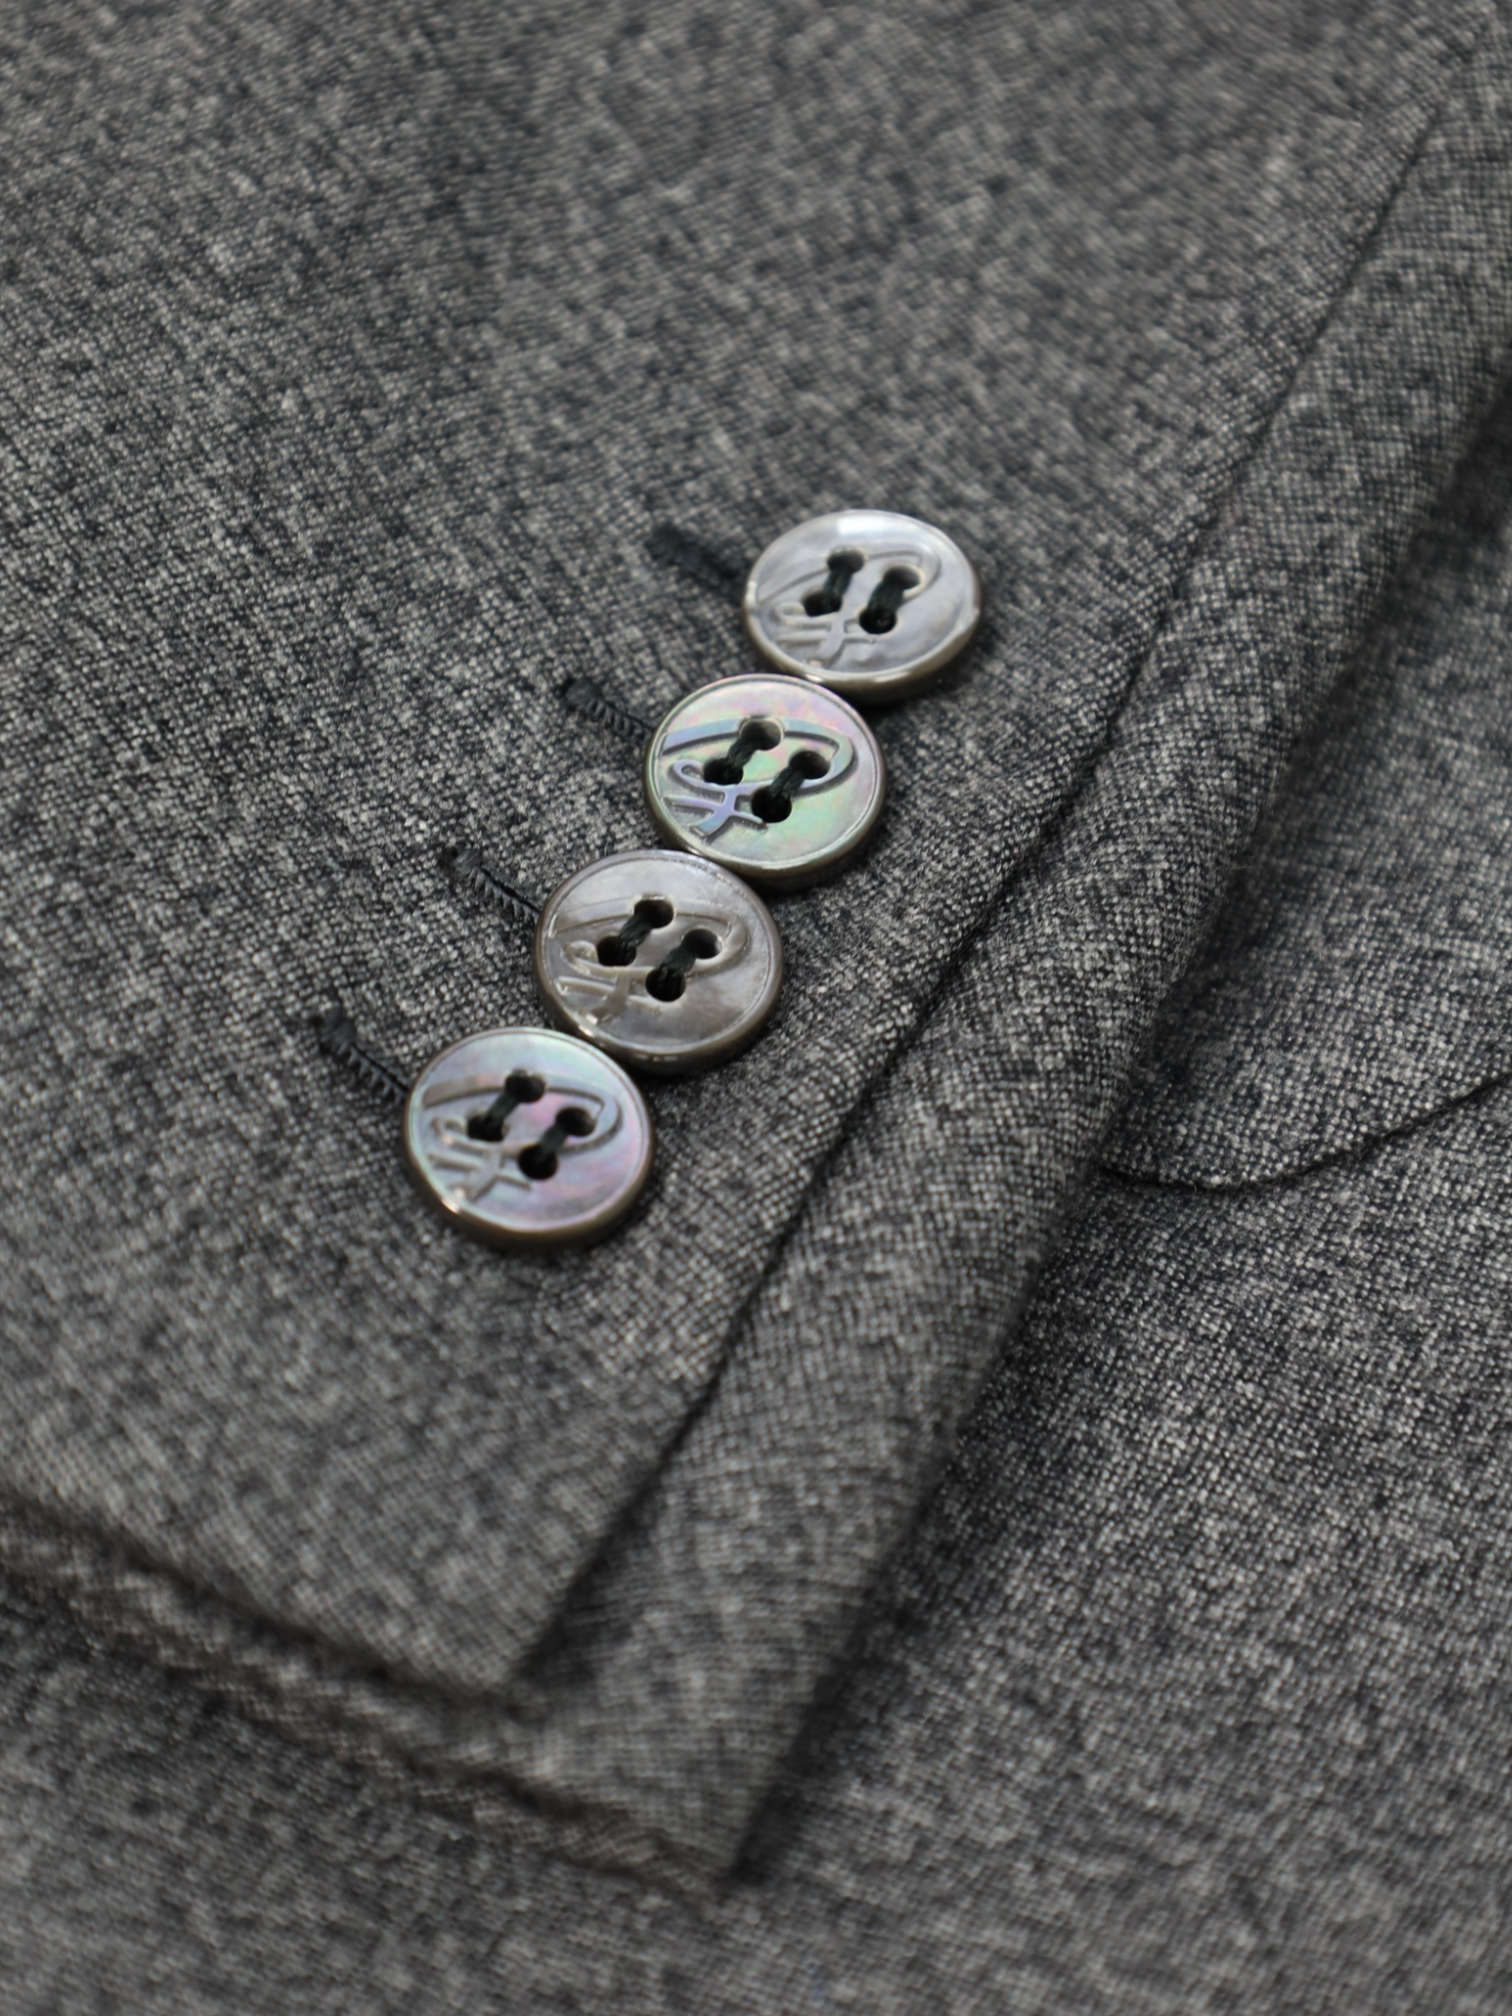 Brioni Grey Cashmere & Silk Bracciano Jacket